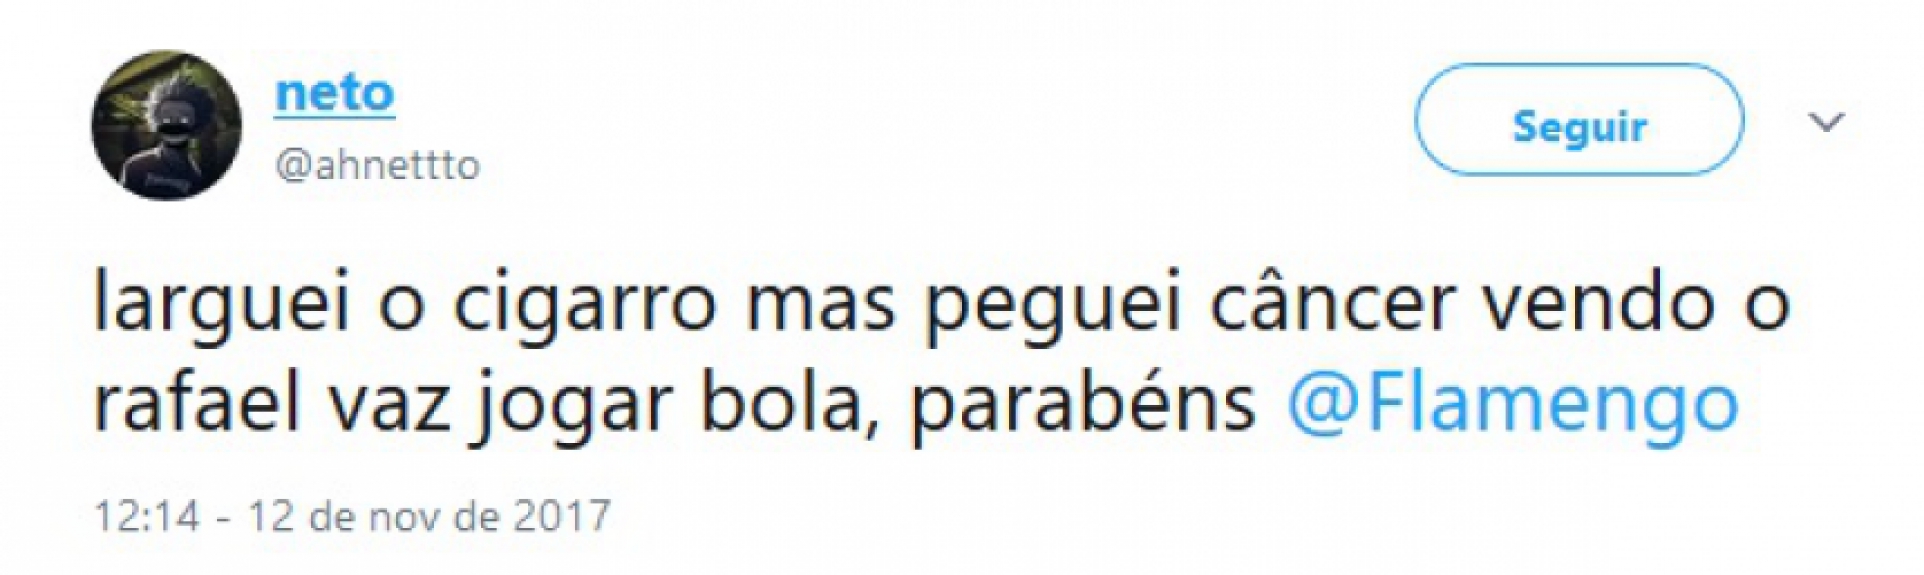 Rafael Vaz foi muito criticado nas redes sociais durante derrota para o Palmeiras